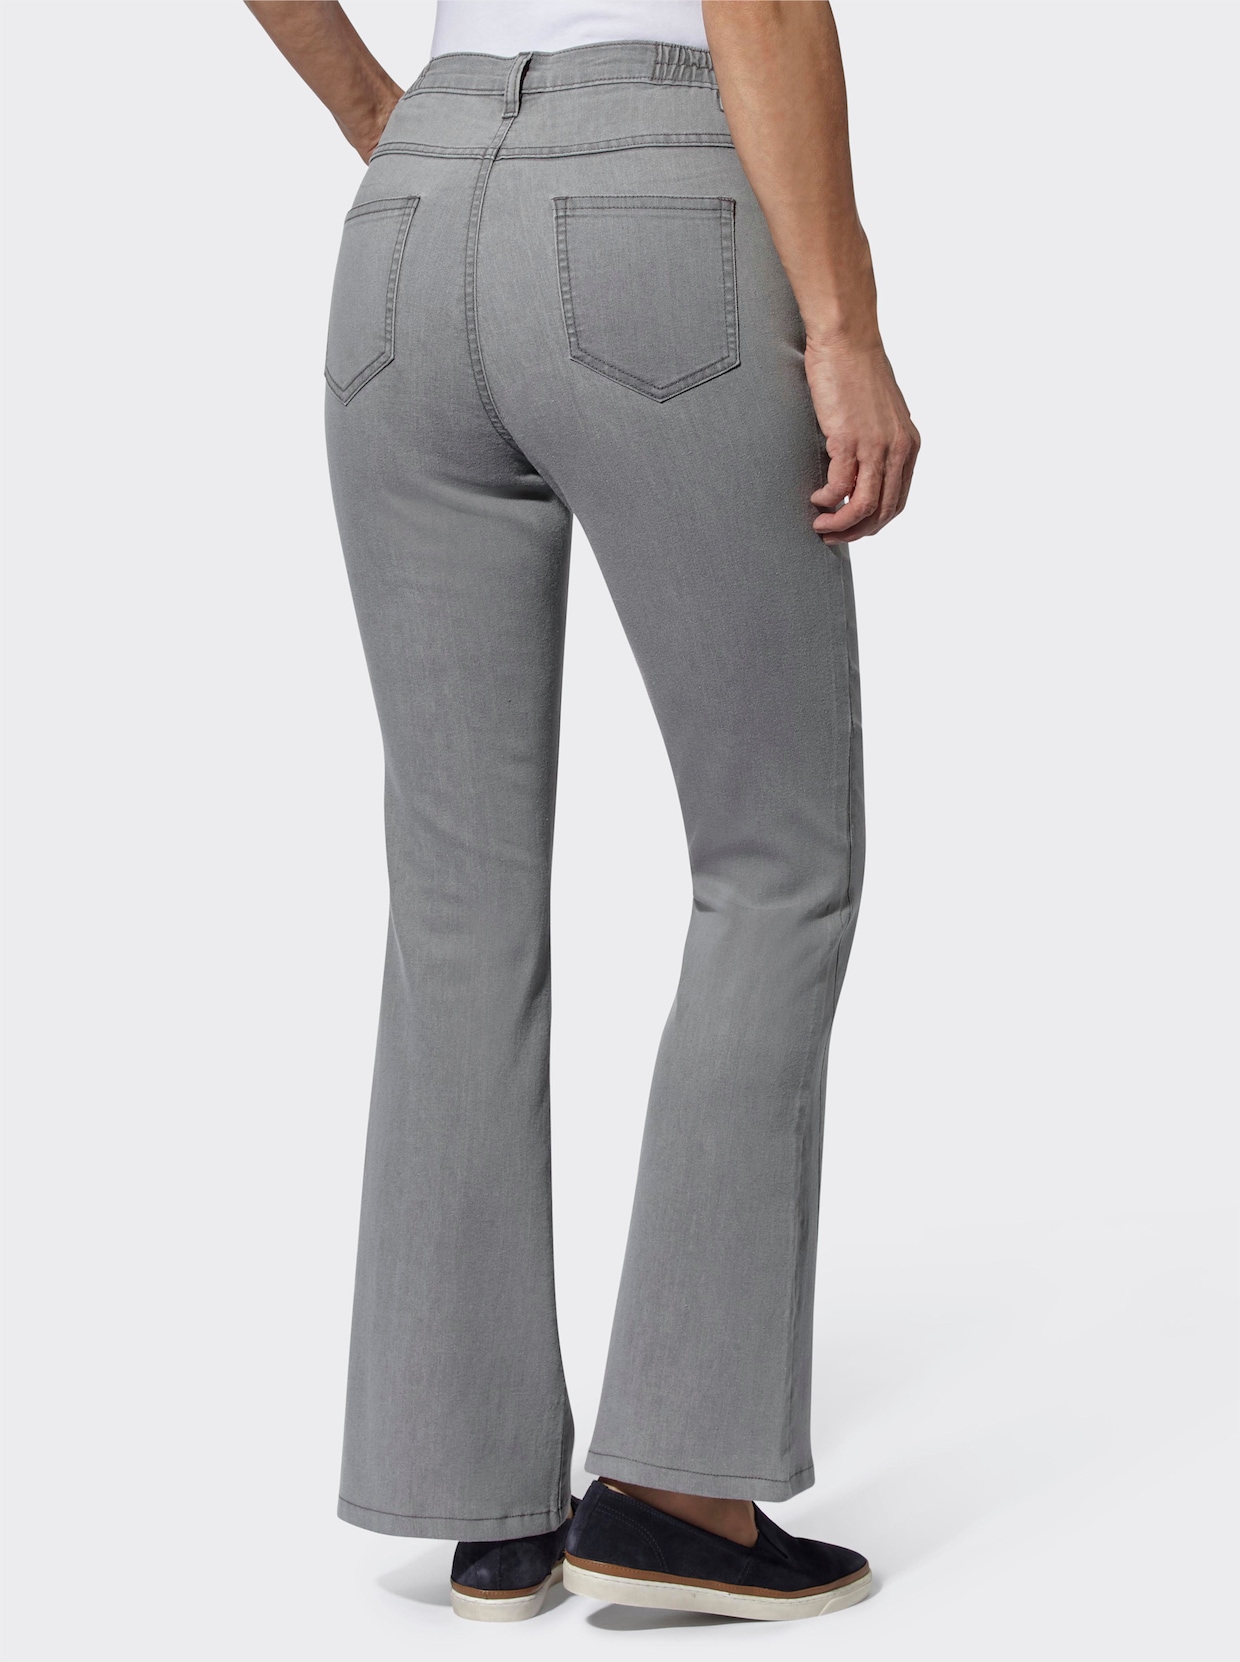 Jeans - light grey-denim